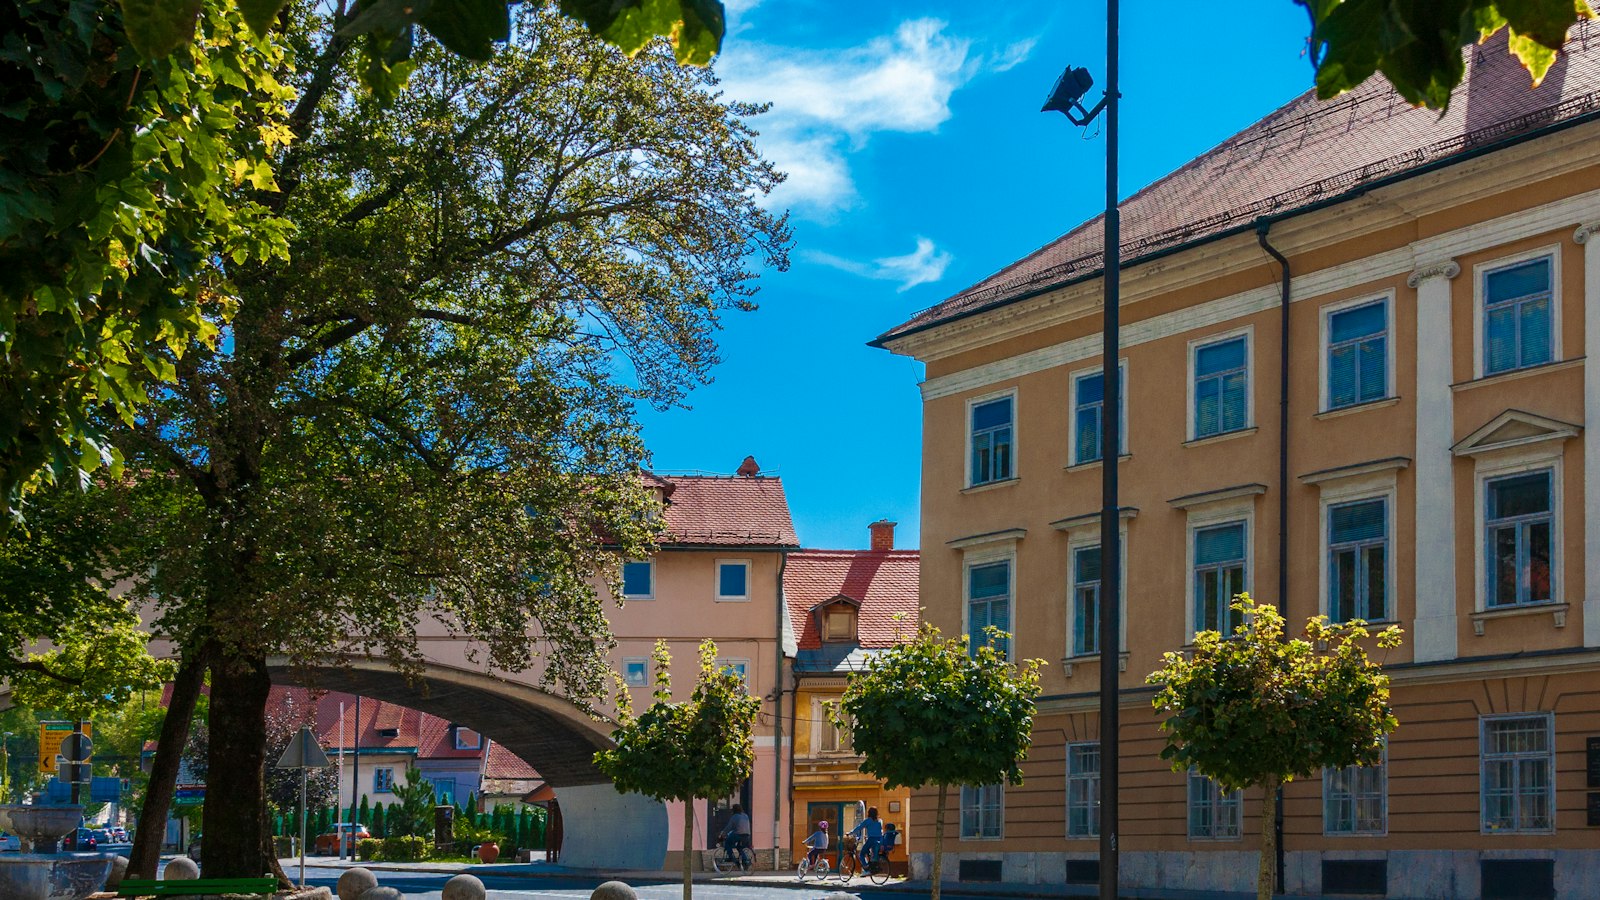 Explore Ljubljana: The Charming Capital Where History Meets Modernity